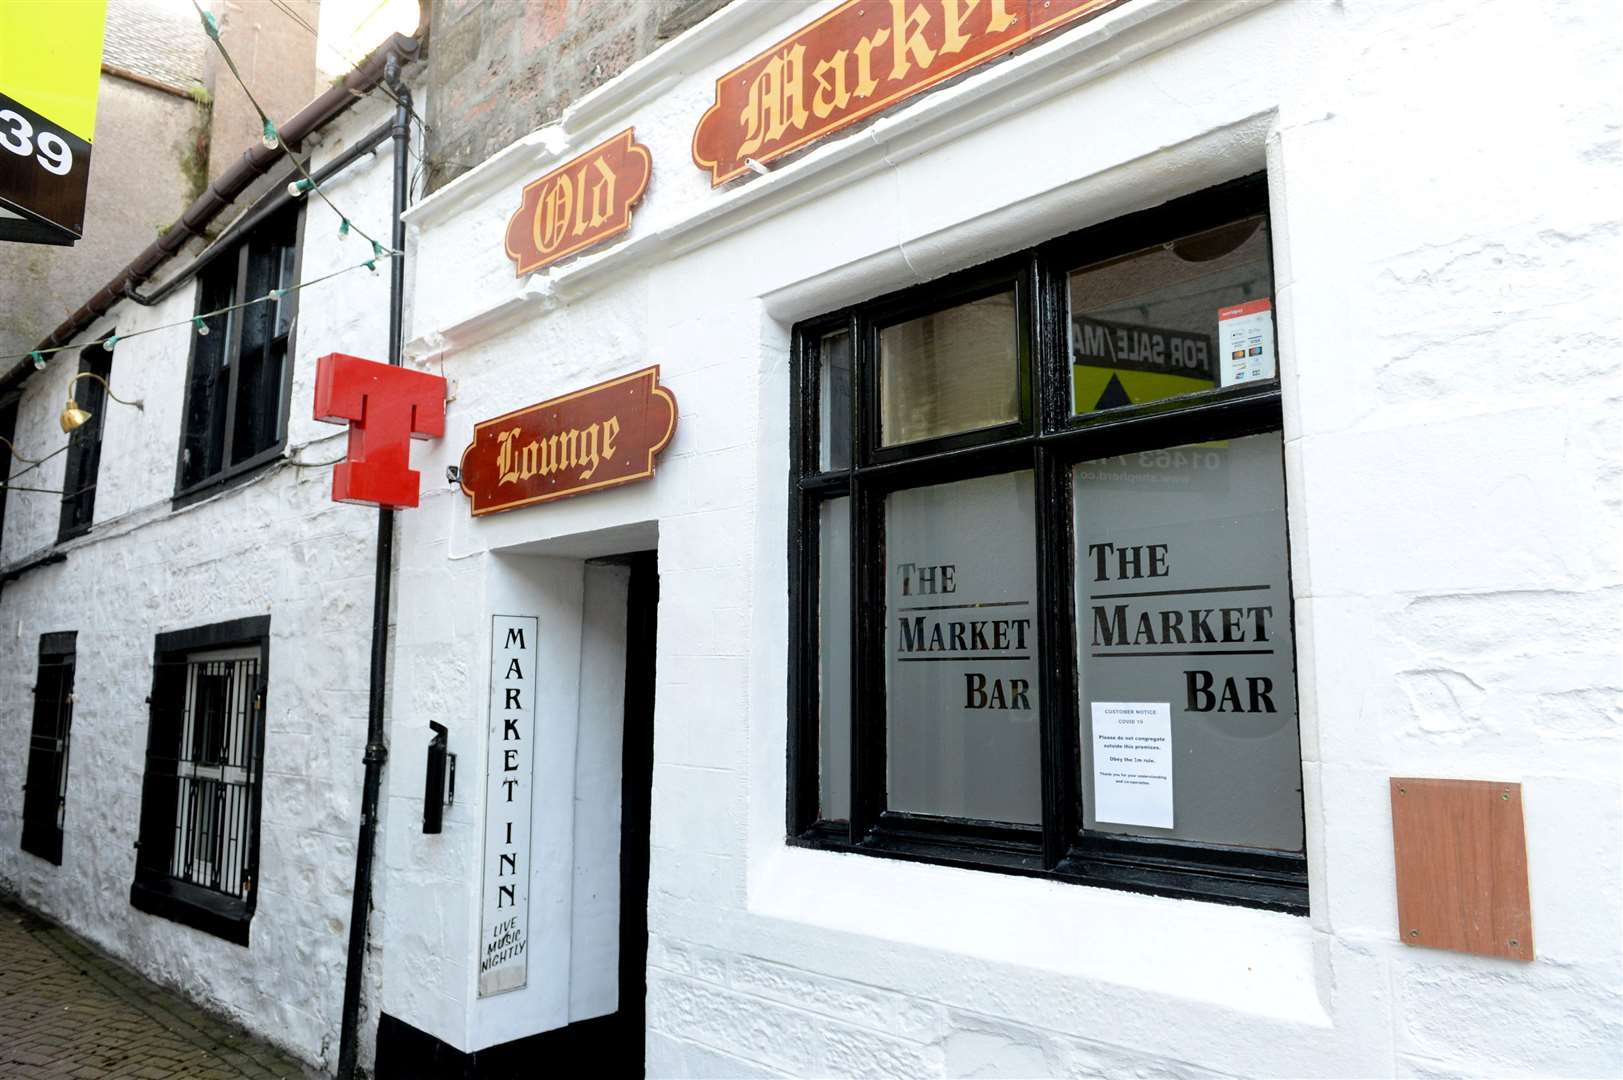 The Market Bar.